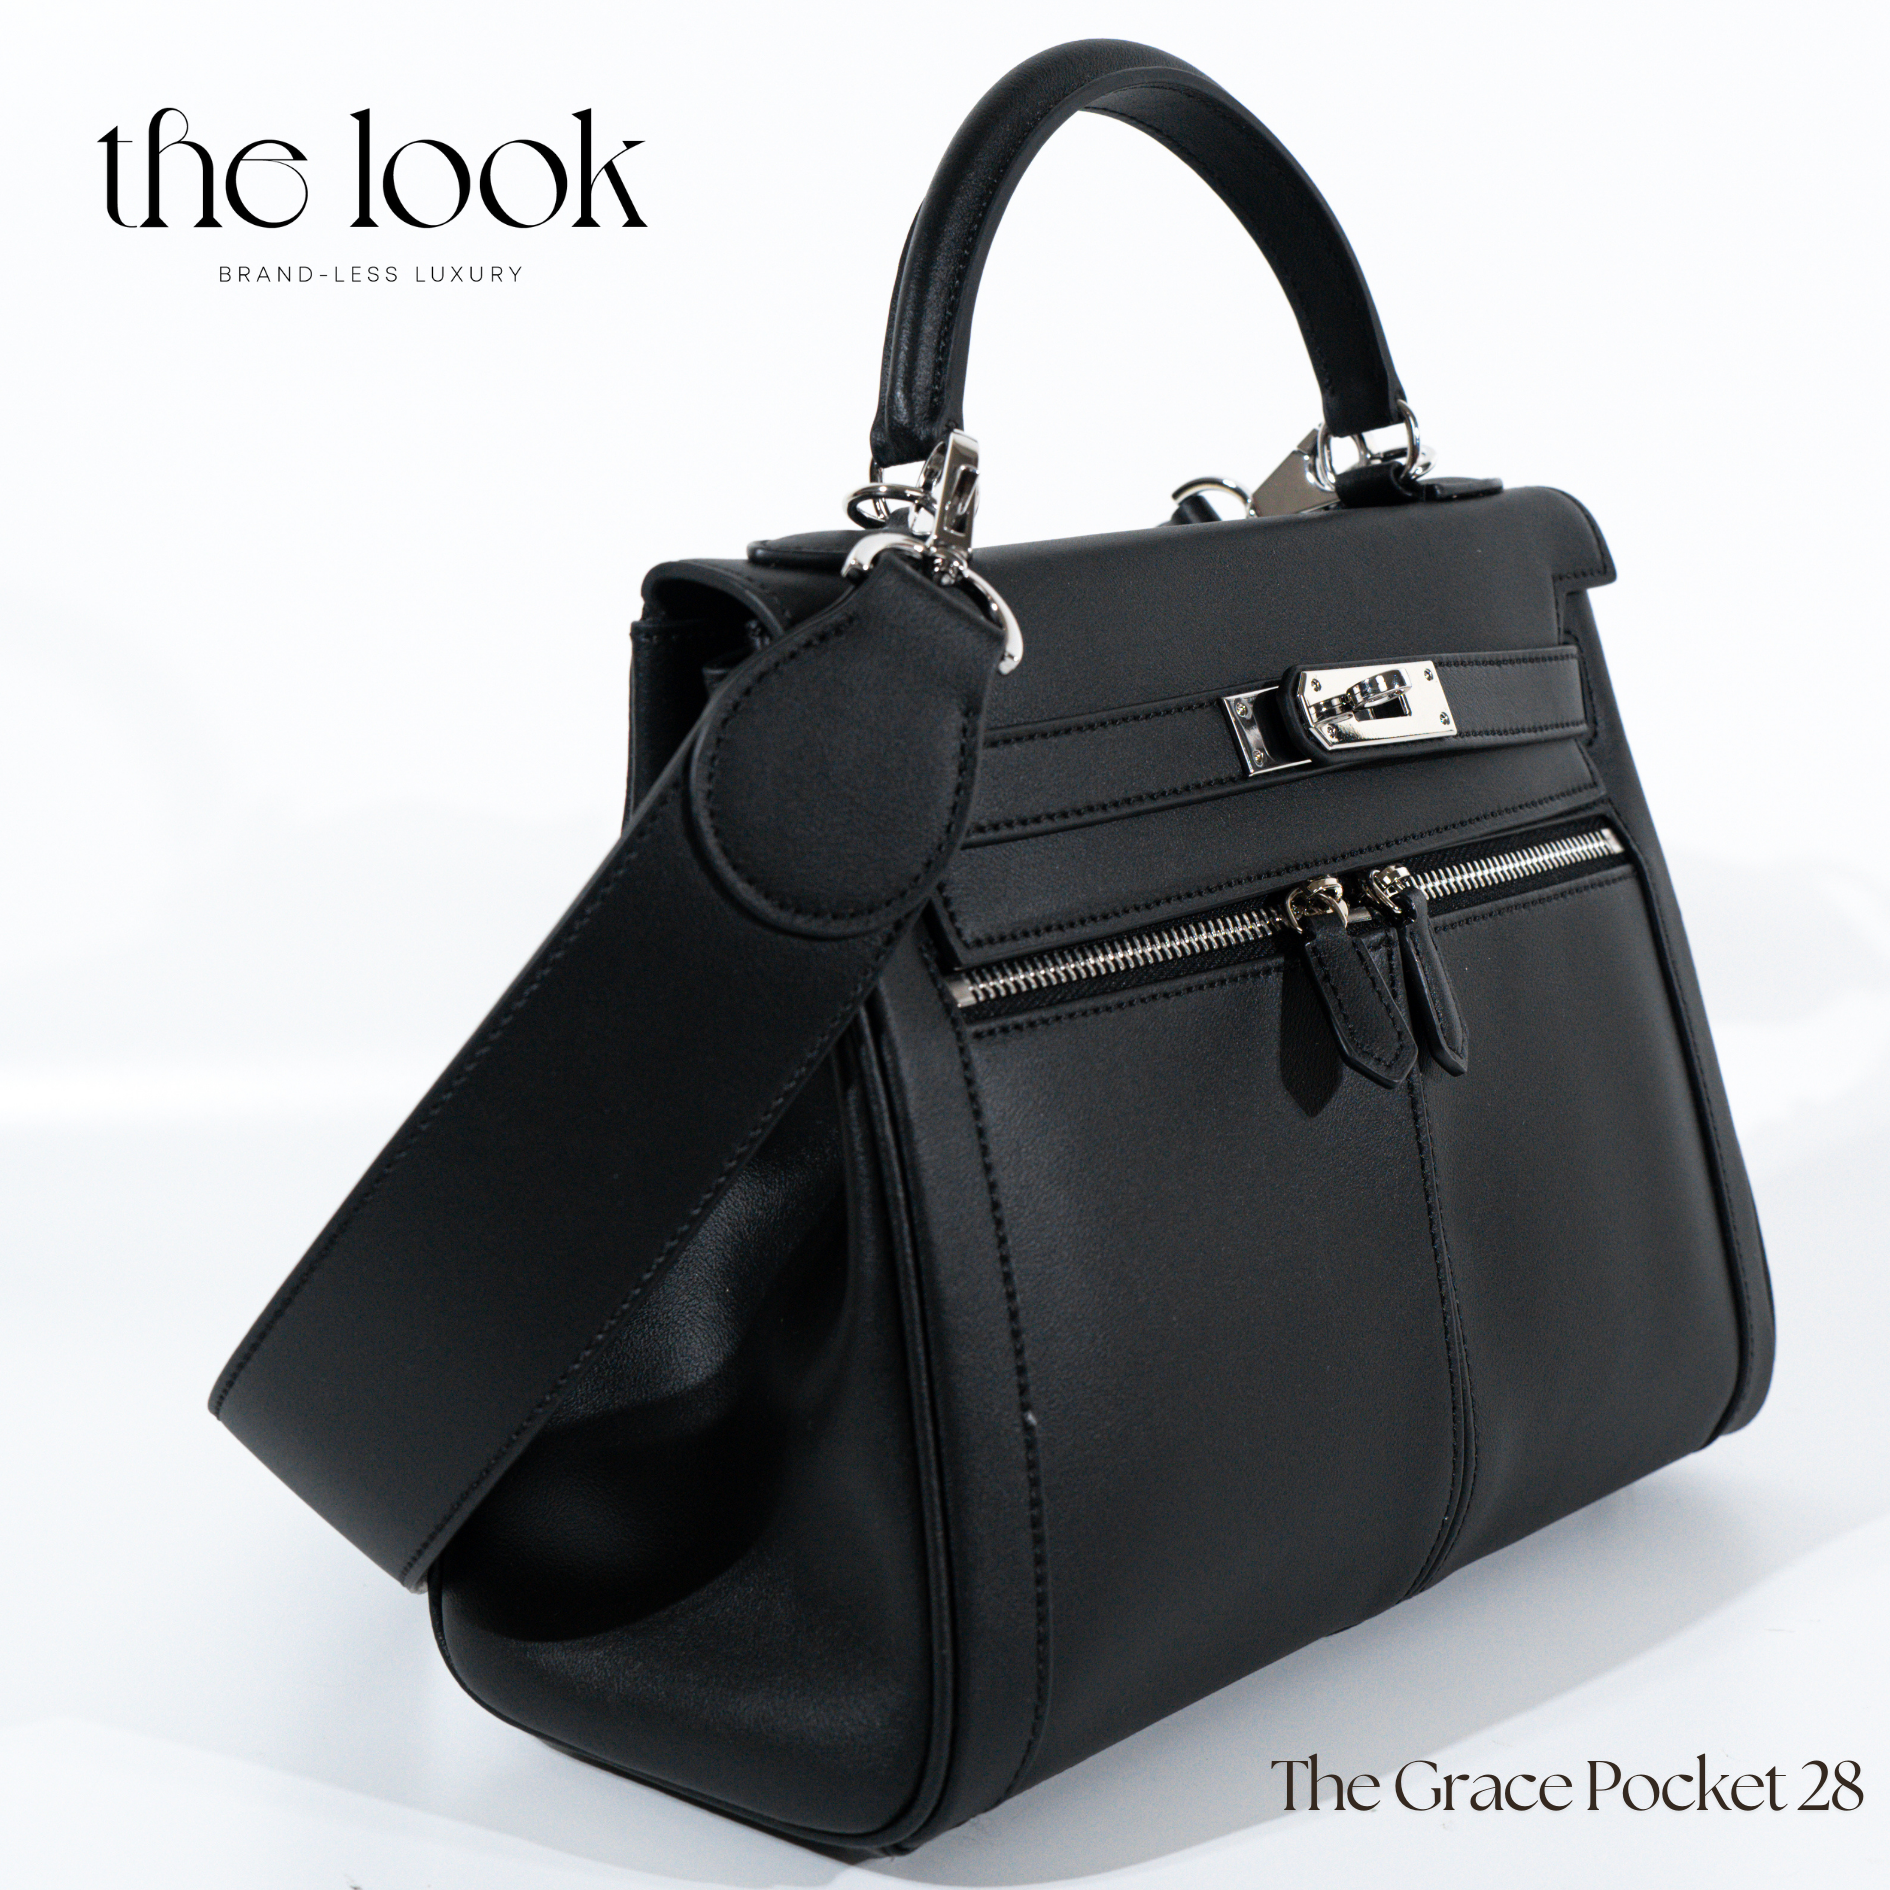 The Grace 28 Pocket Swift Leather in Noir SHW by The Look